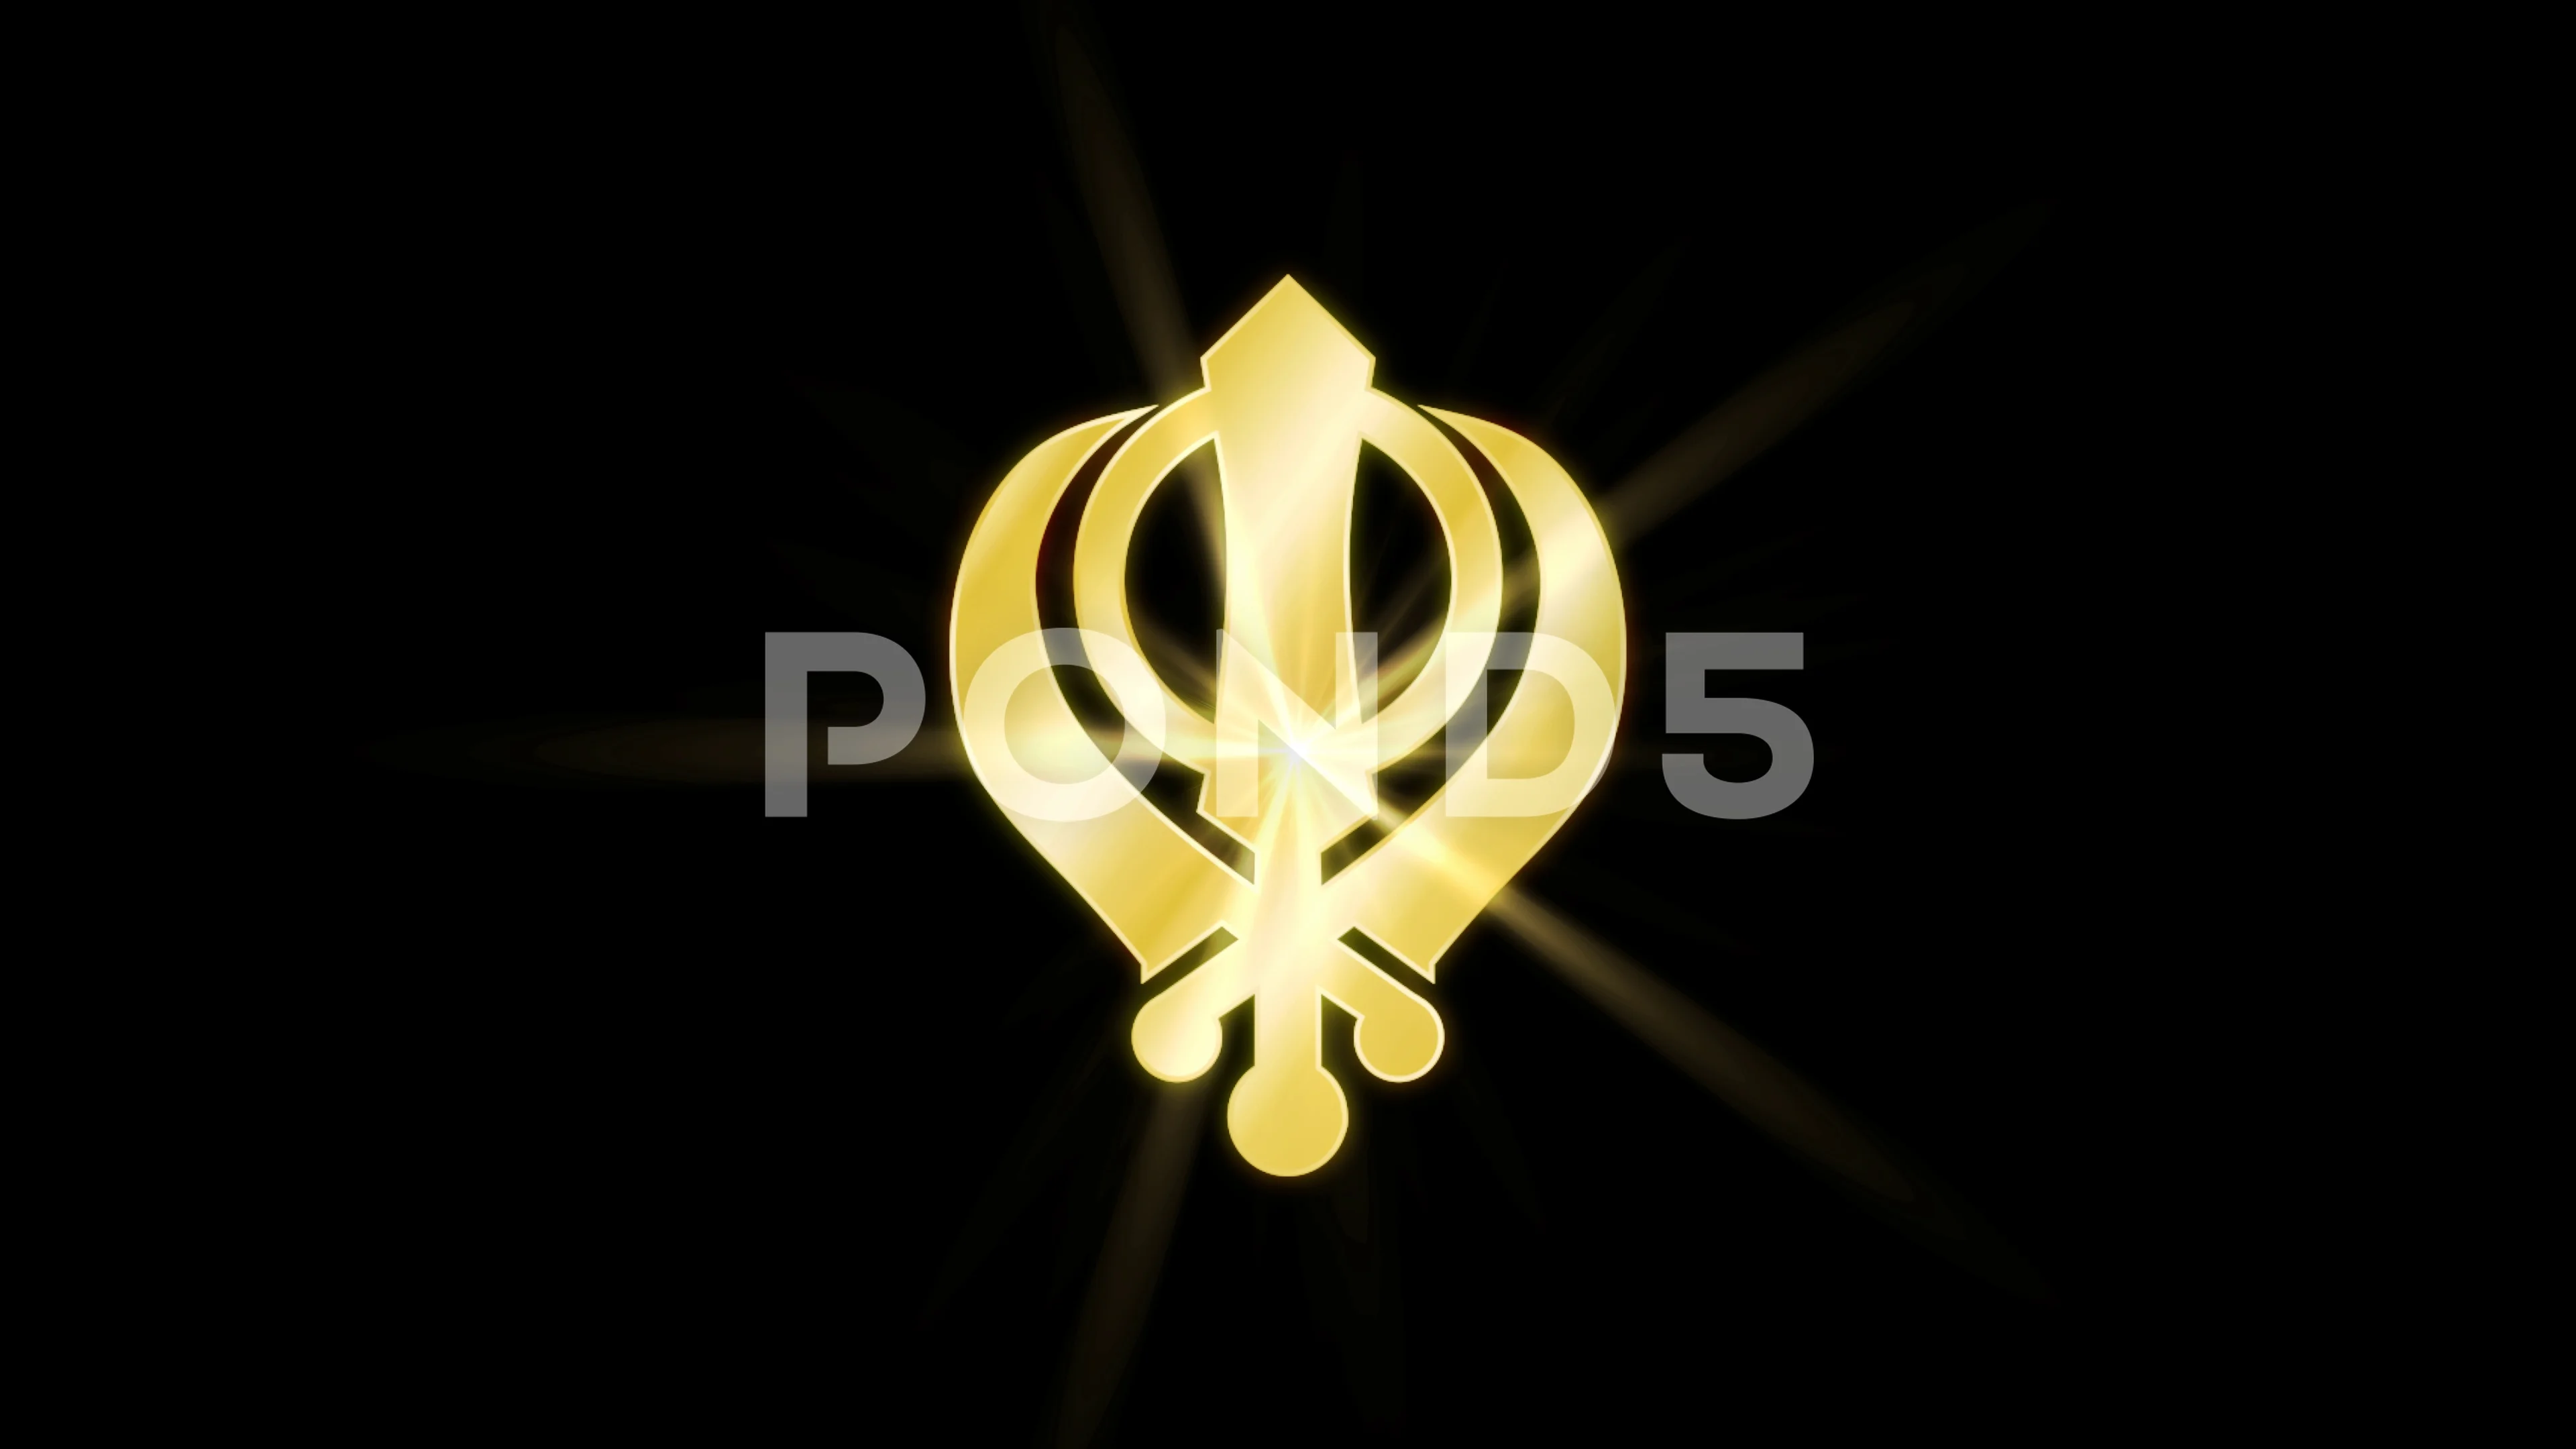 symbol of sikhism